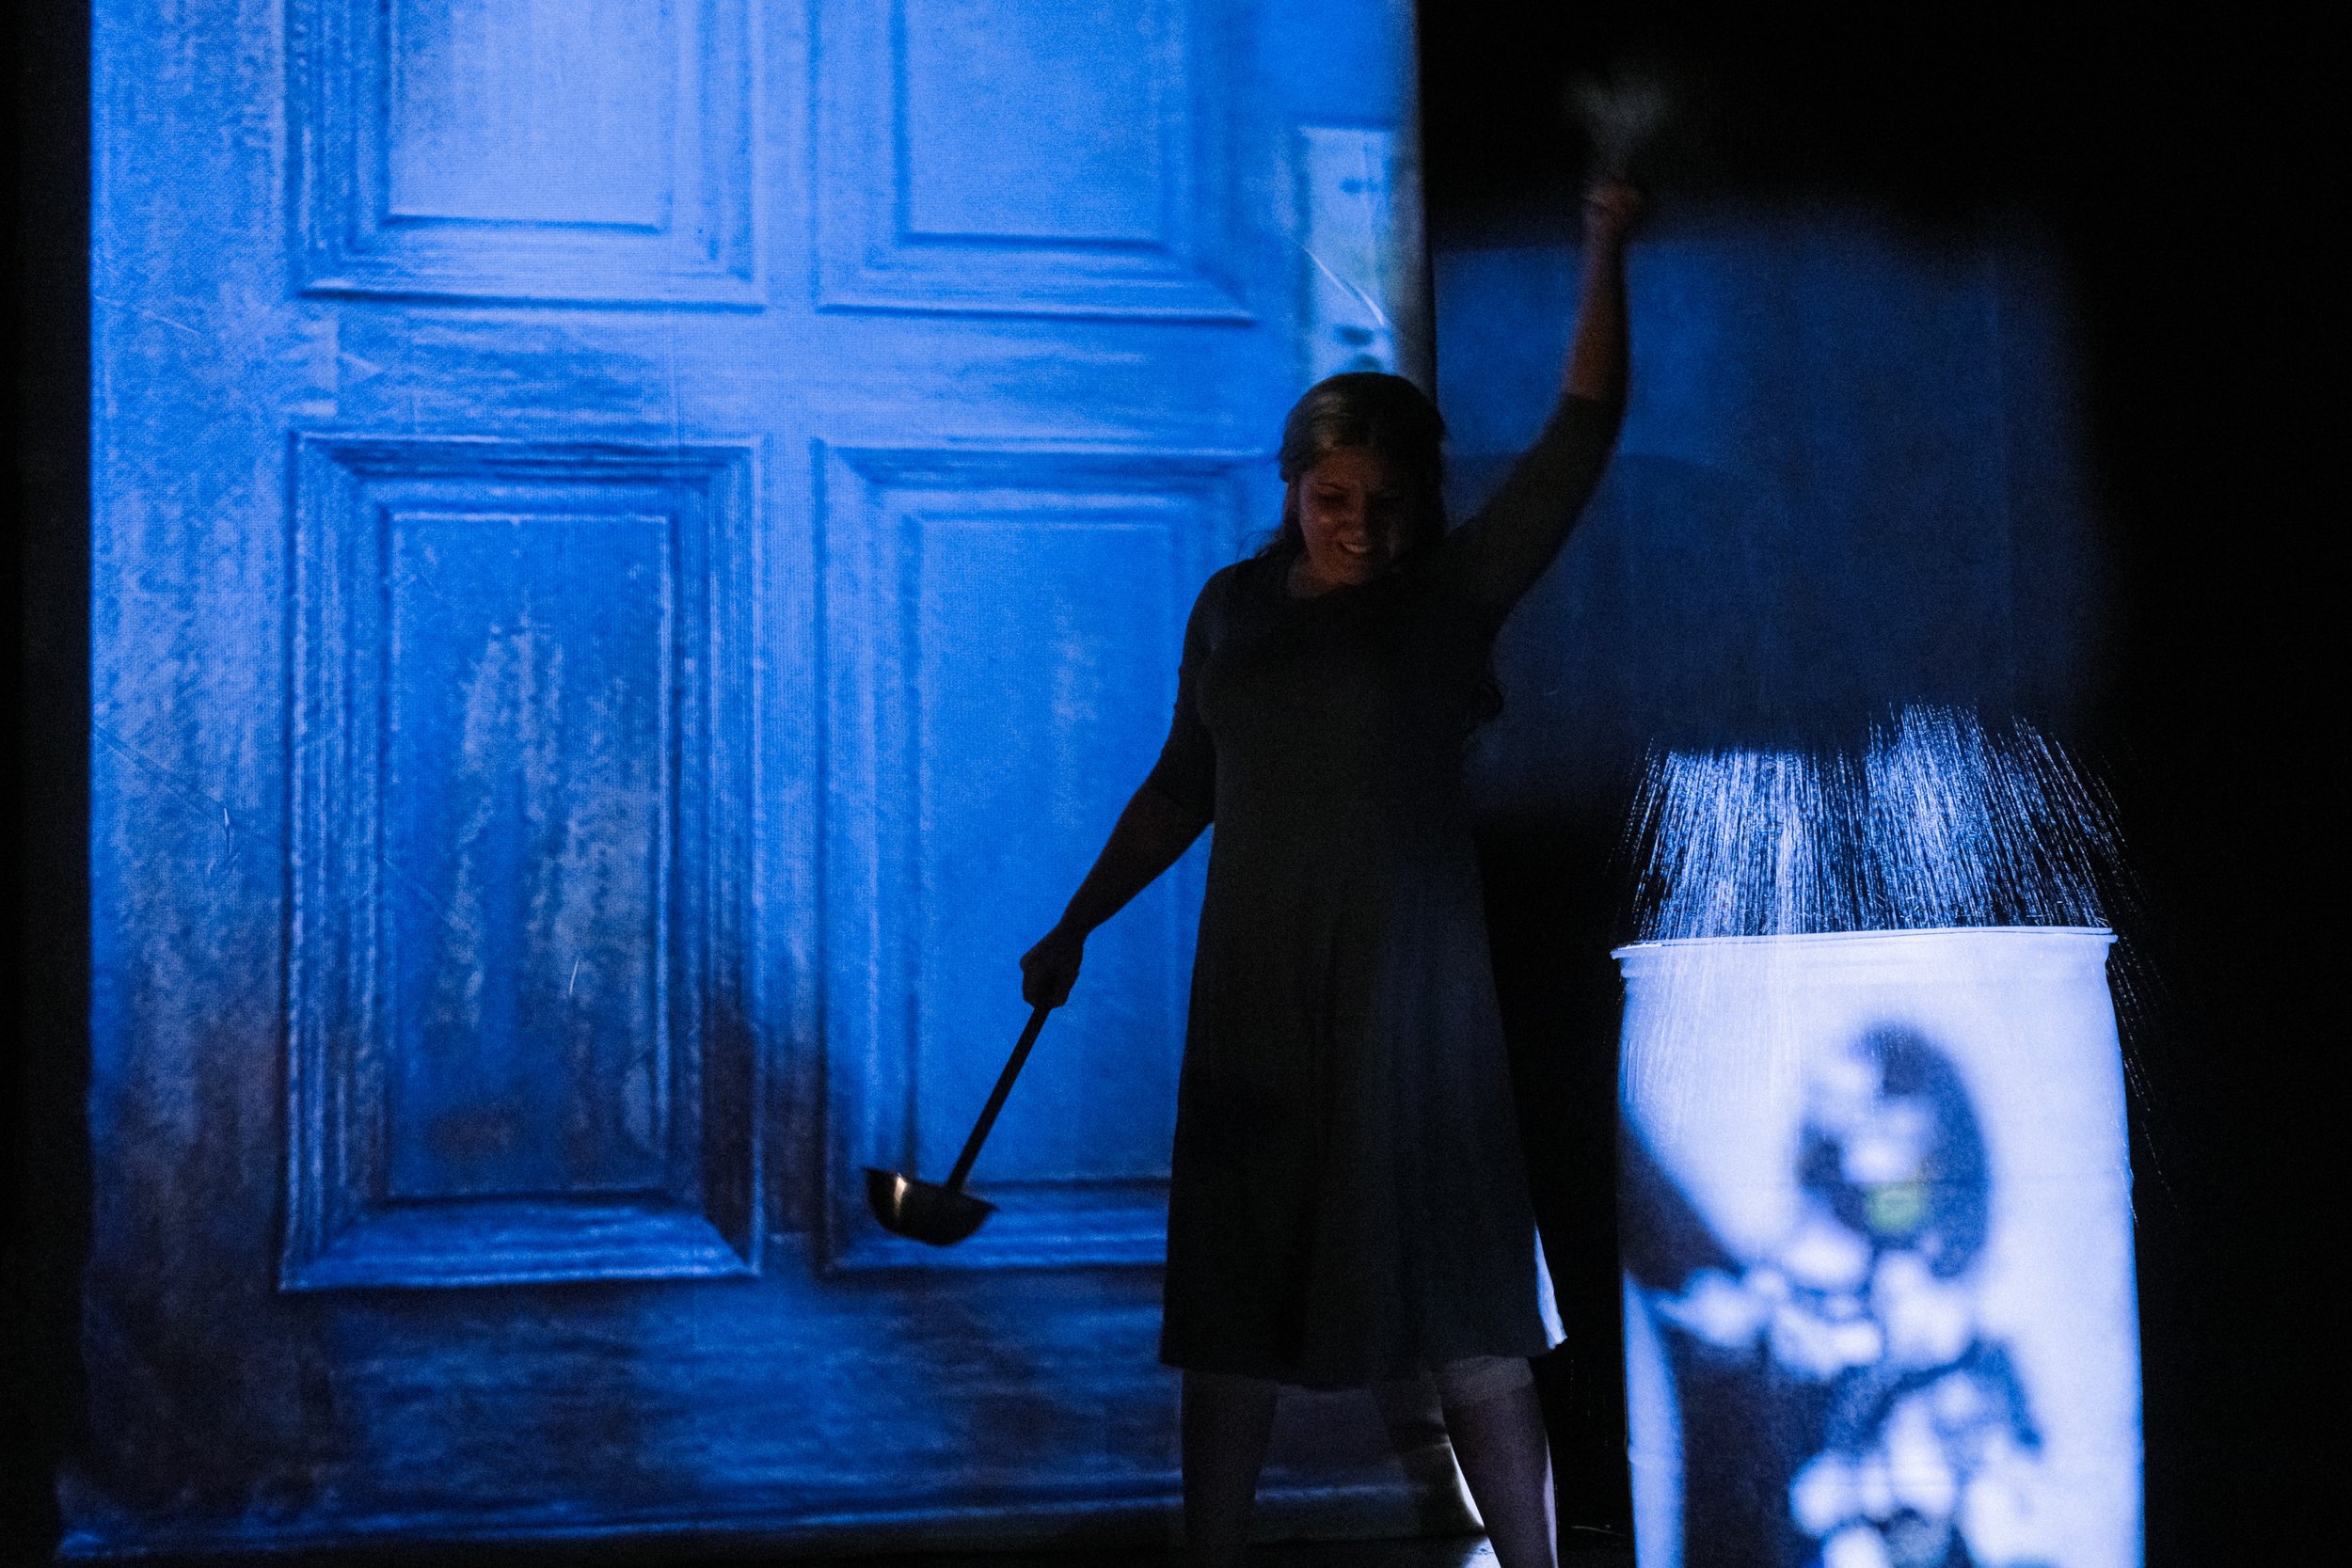 Aliana de la Guardia performing in "SALT" at Boston's Museum of Science. Photo by Tim Gurczak (Nov. 17, 2021)